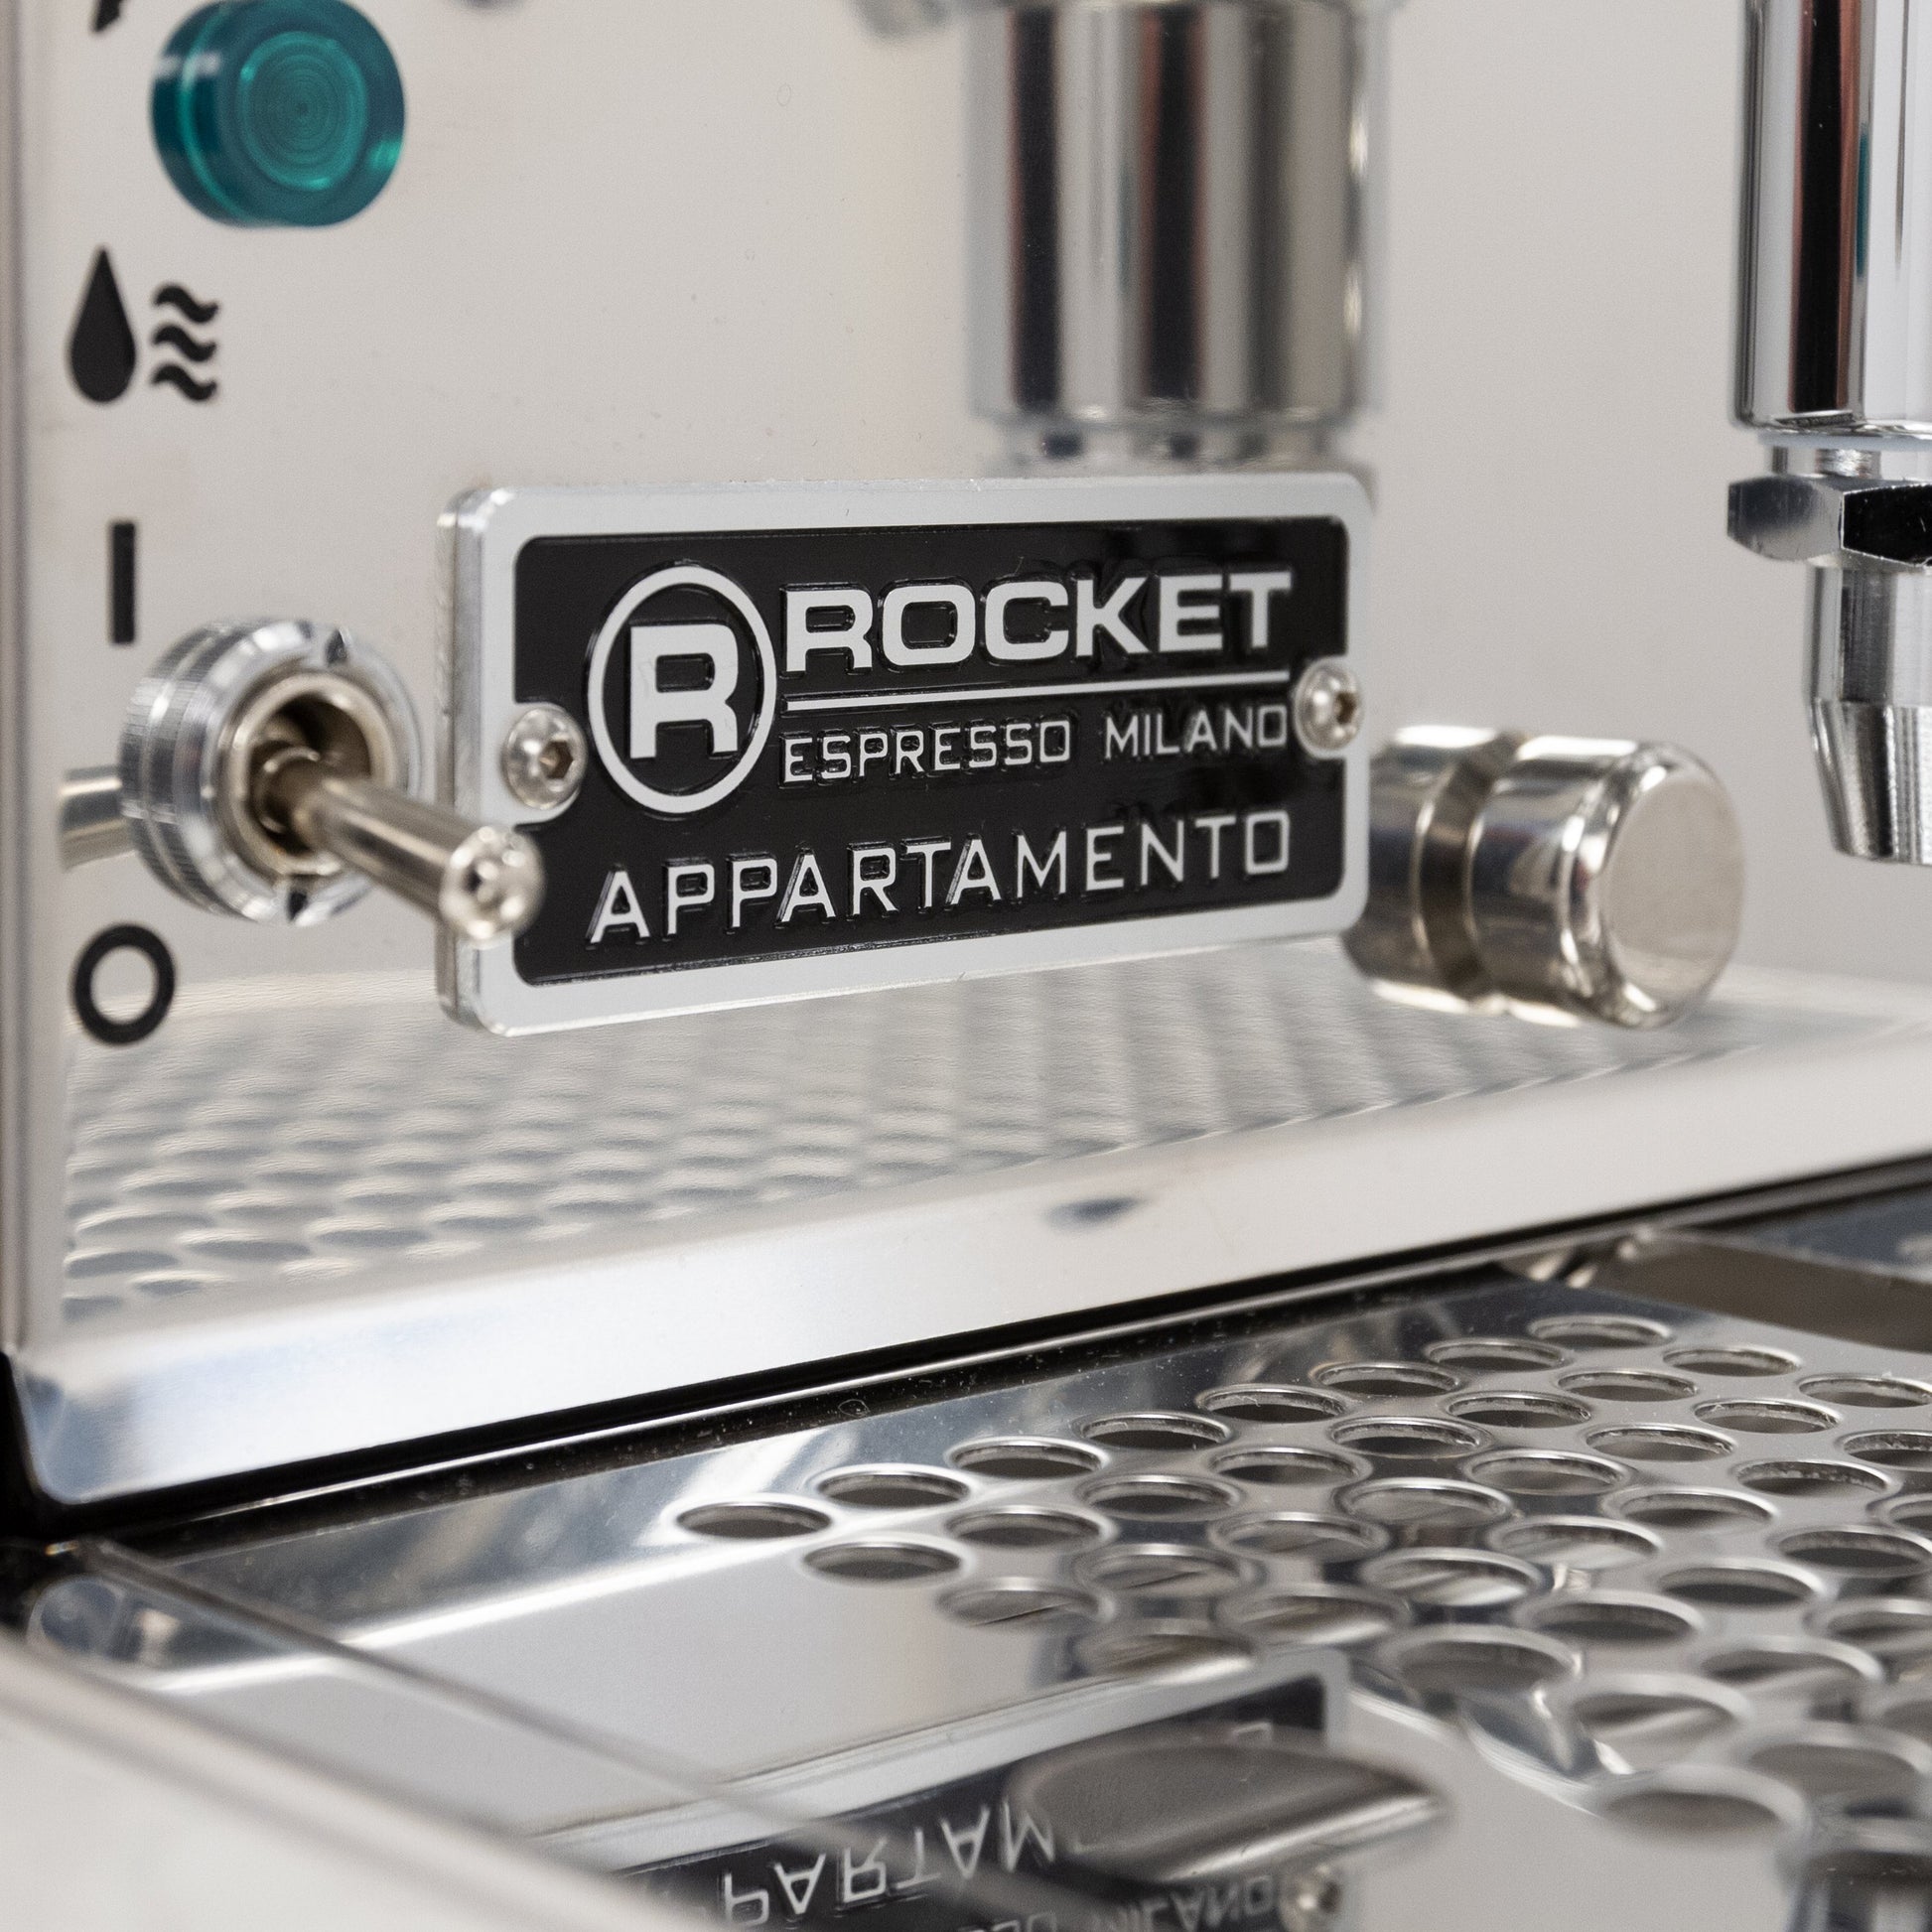 Rocket Espresso Appartamento emblem